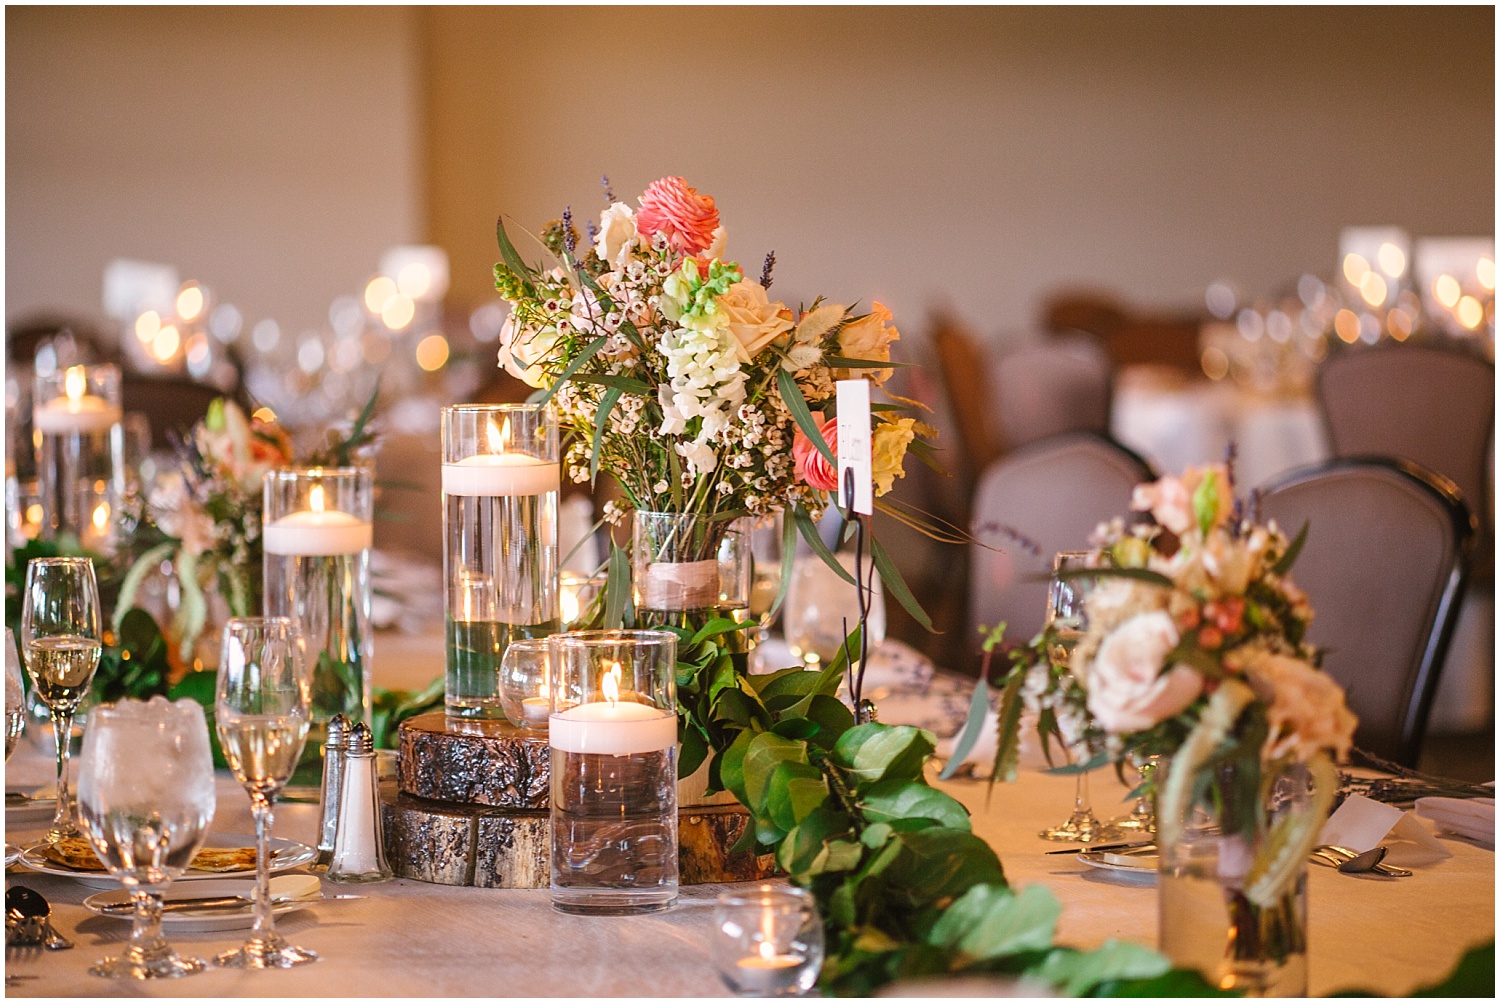 Lavender, peonies and candles for Hyatt Regency Tamaya wedding reception details